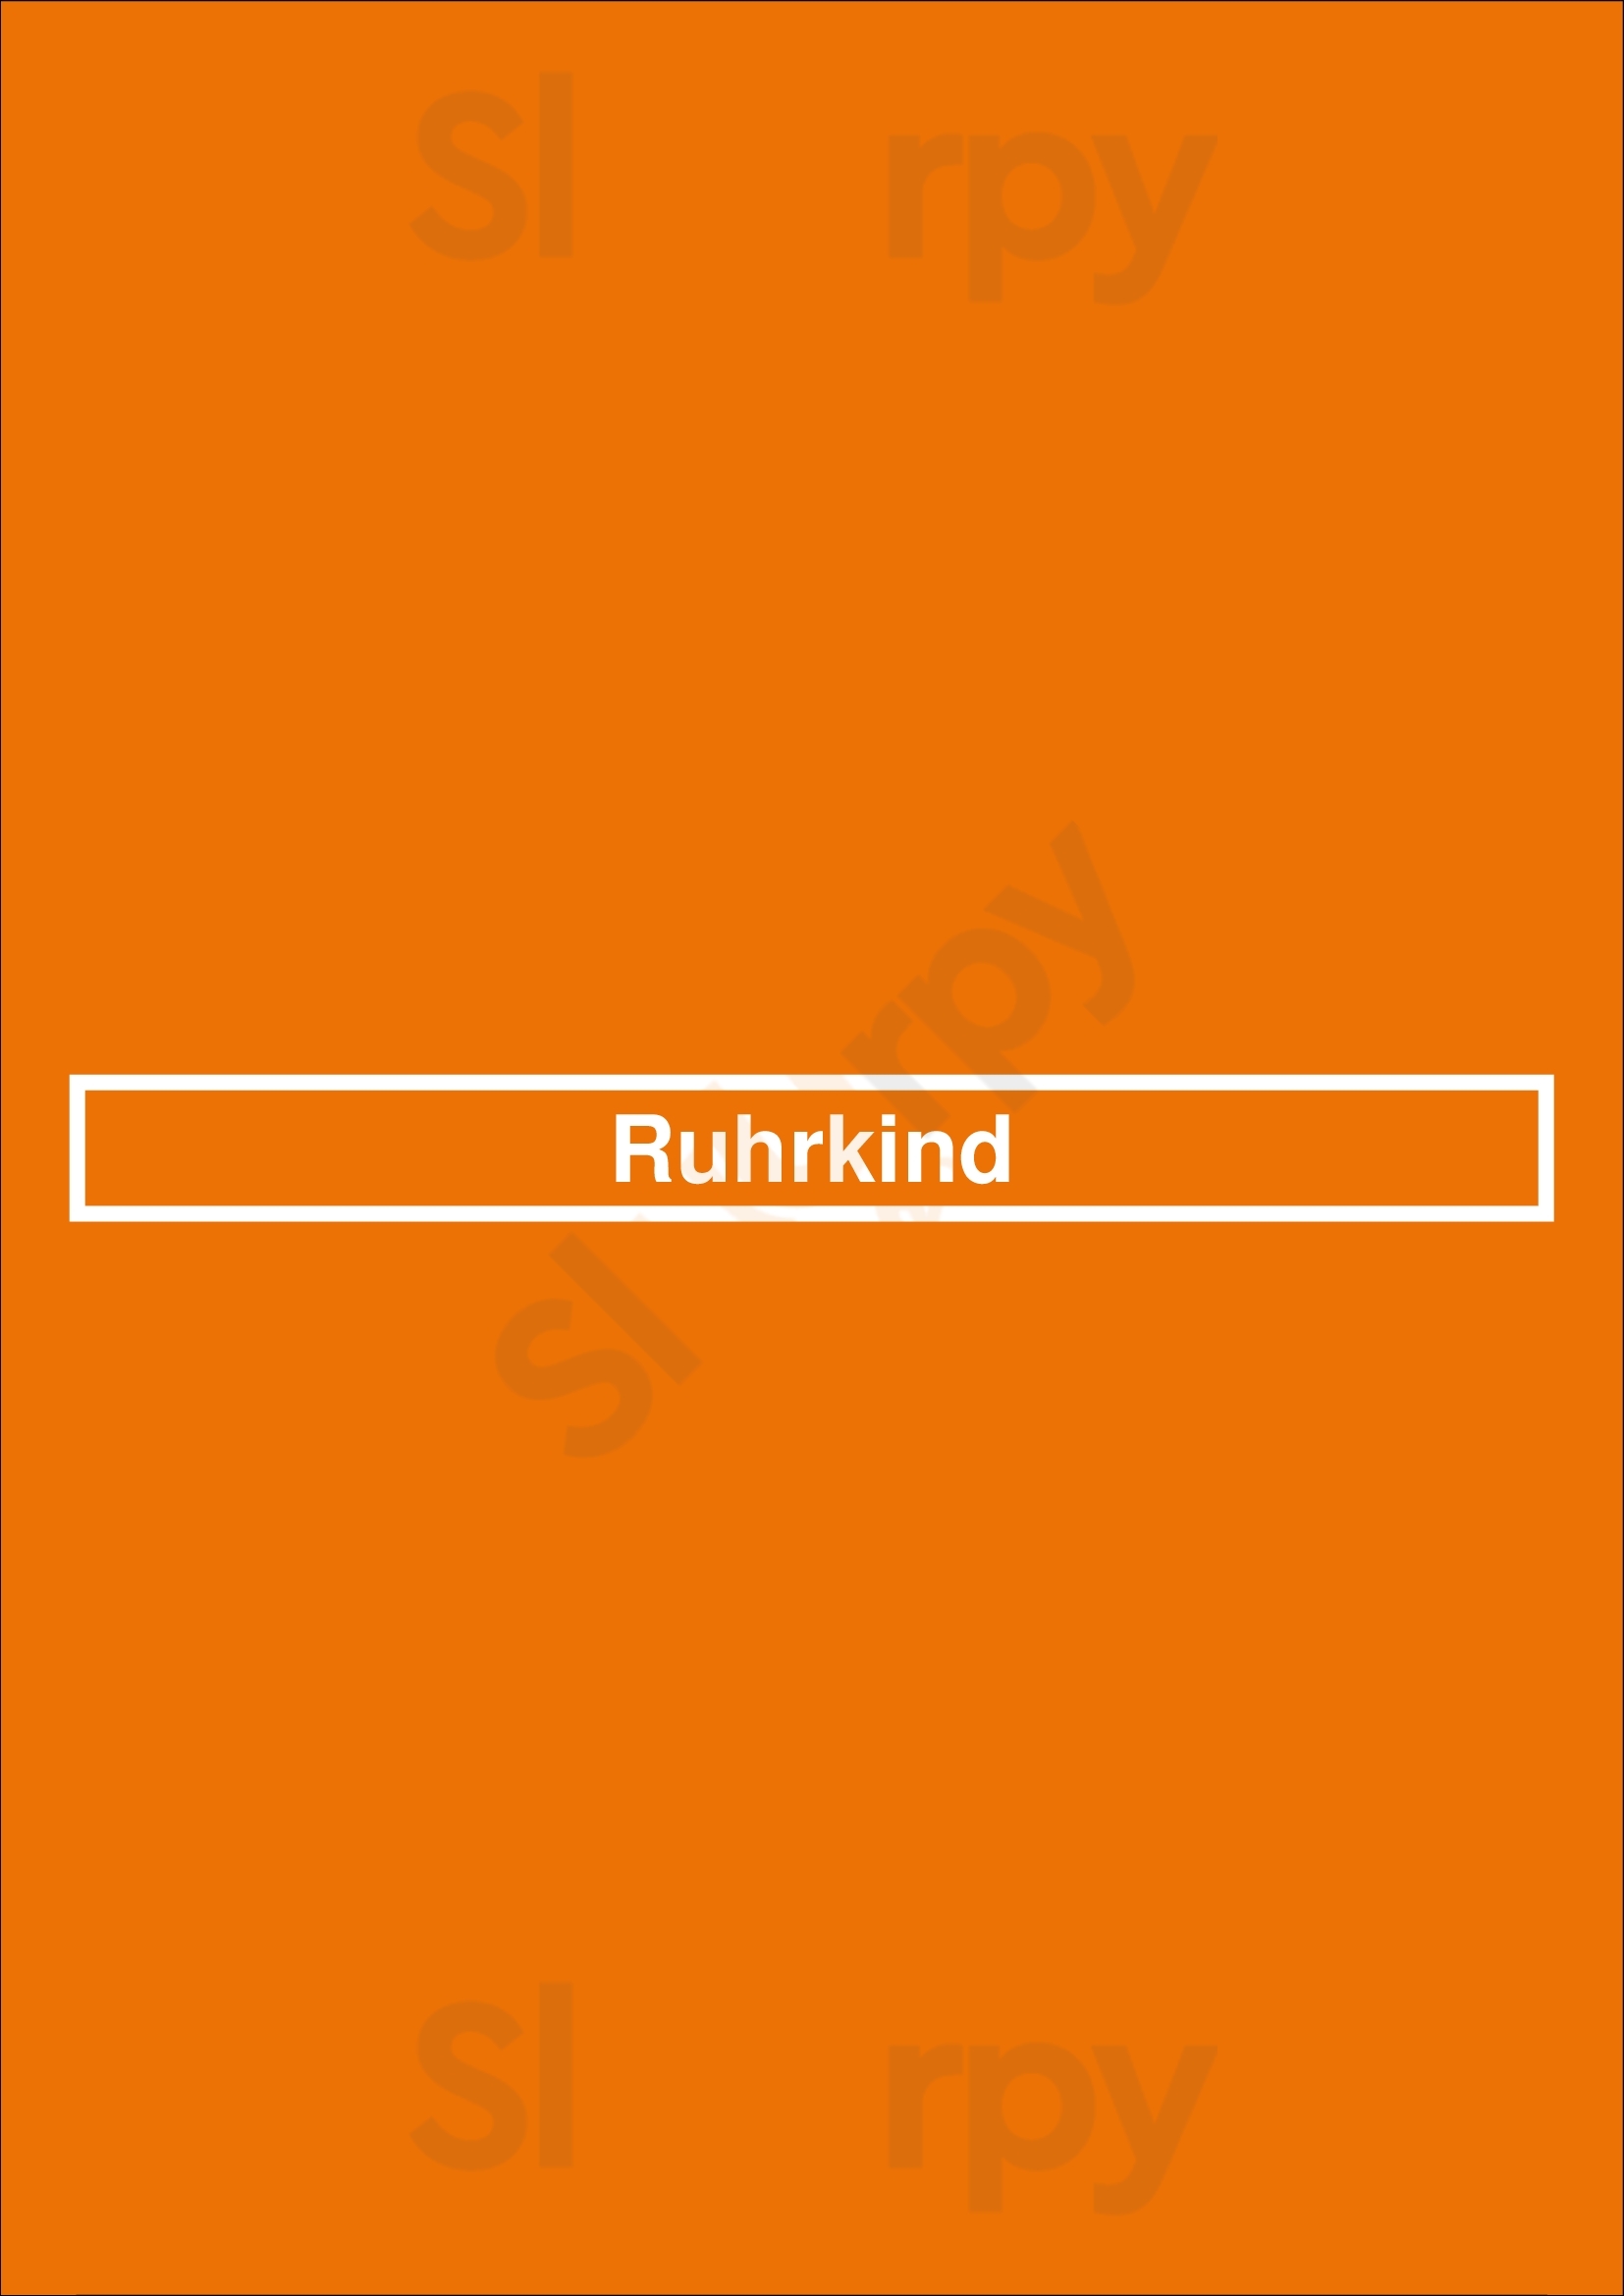 Ruhrkind Gelsenkirchen Menu - 1